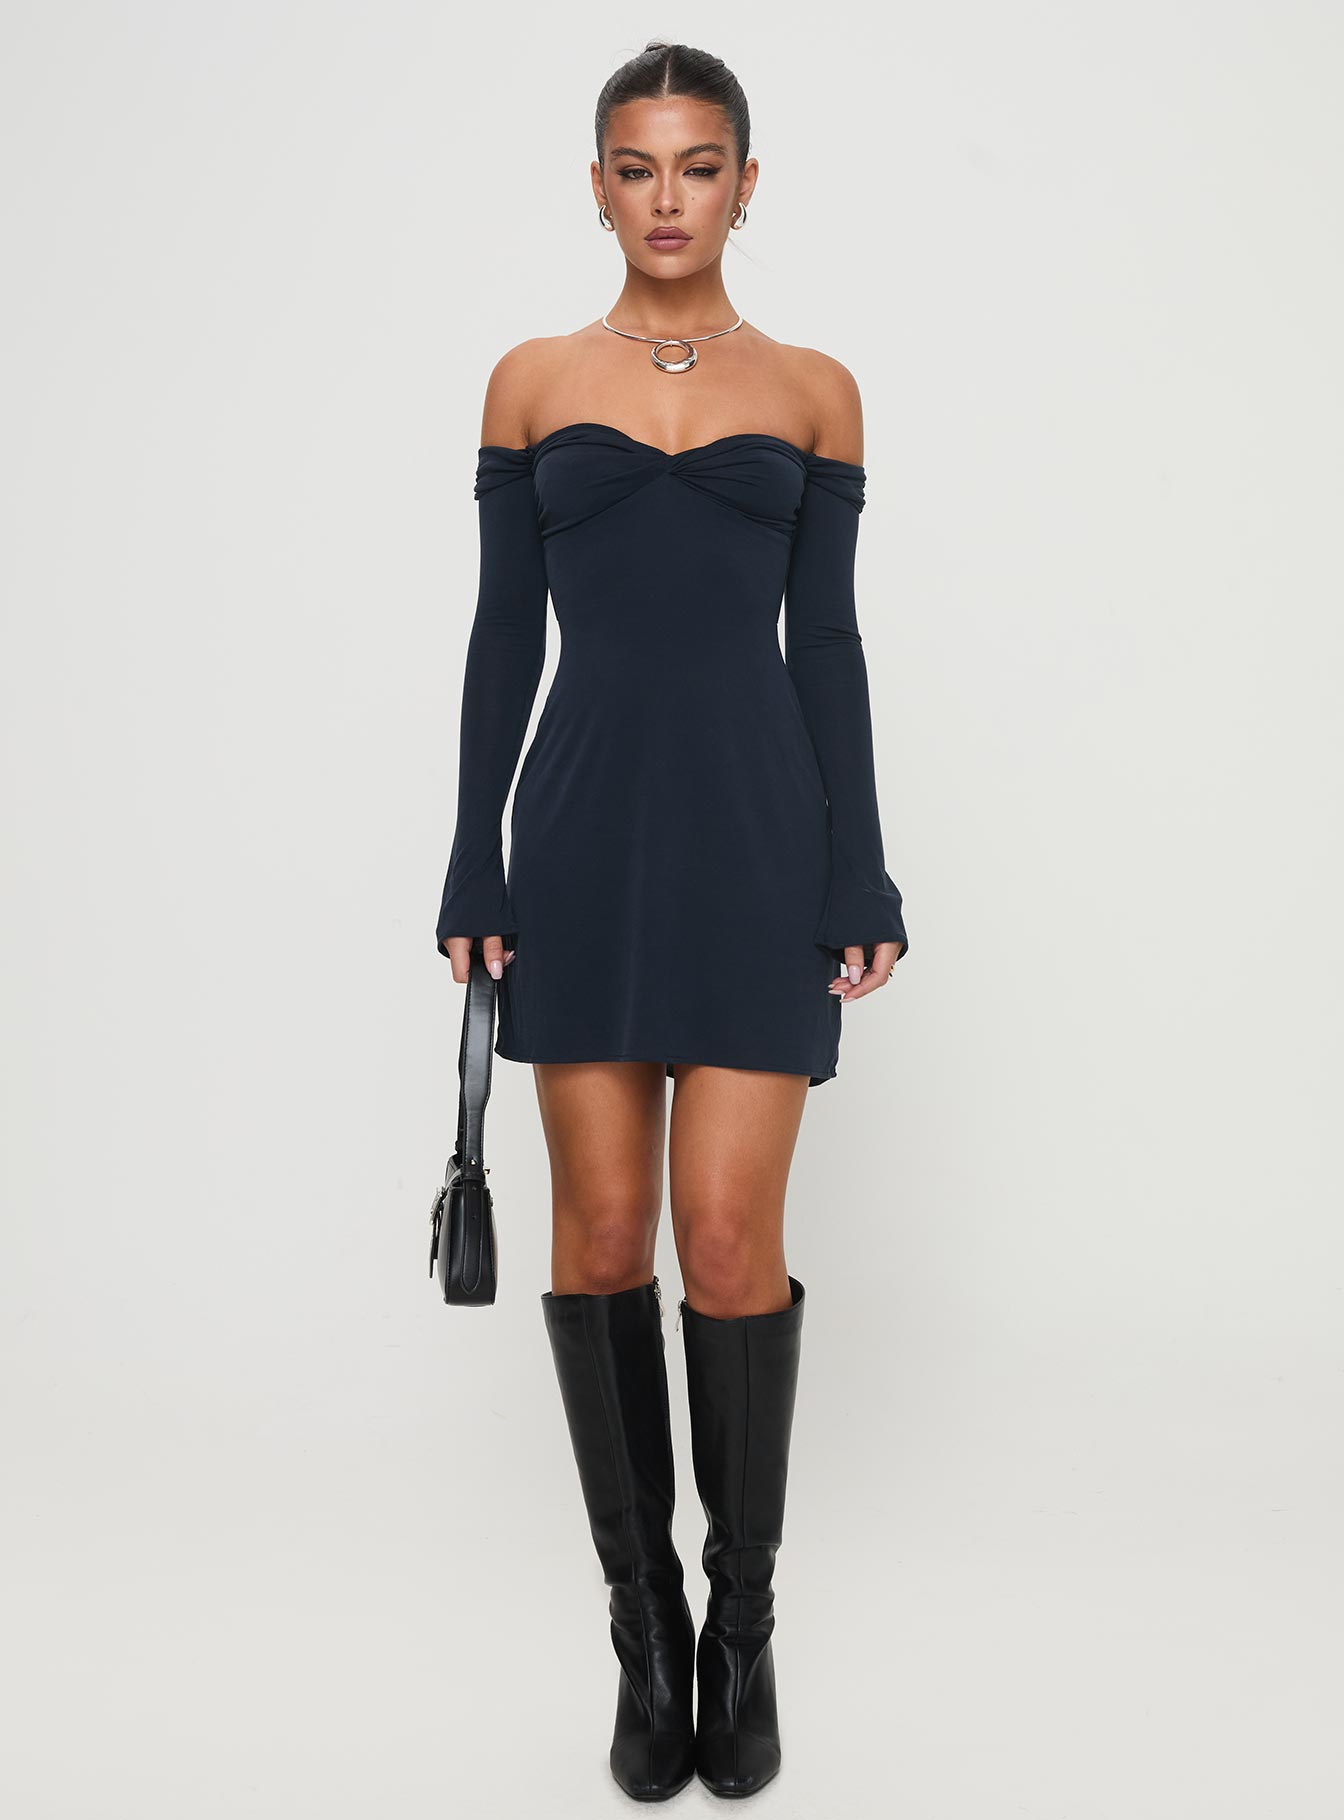 Shop Formal Dress - Suizie Off The Shoulder Mini Dress Navy third image